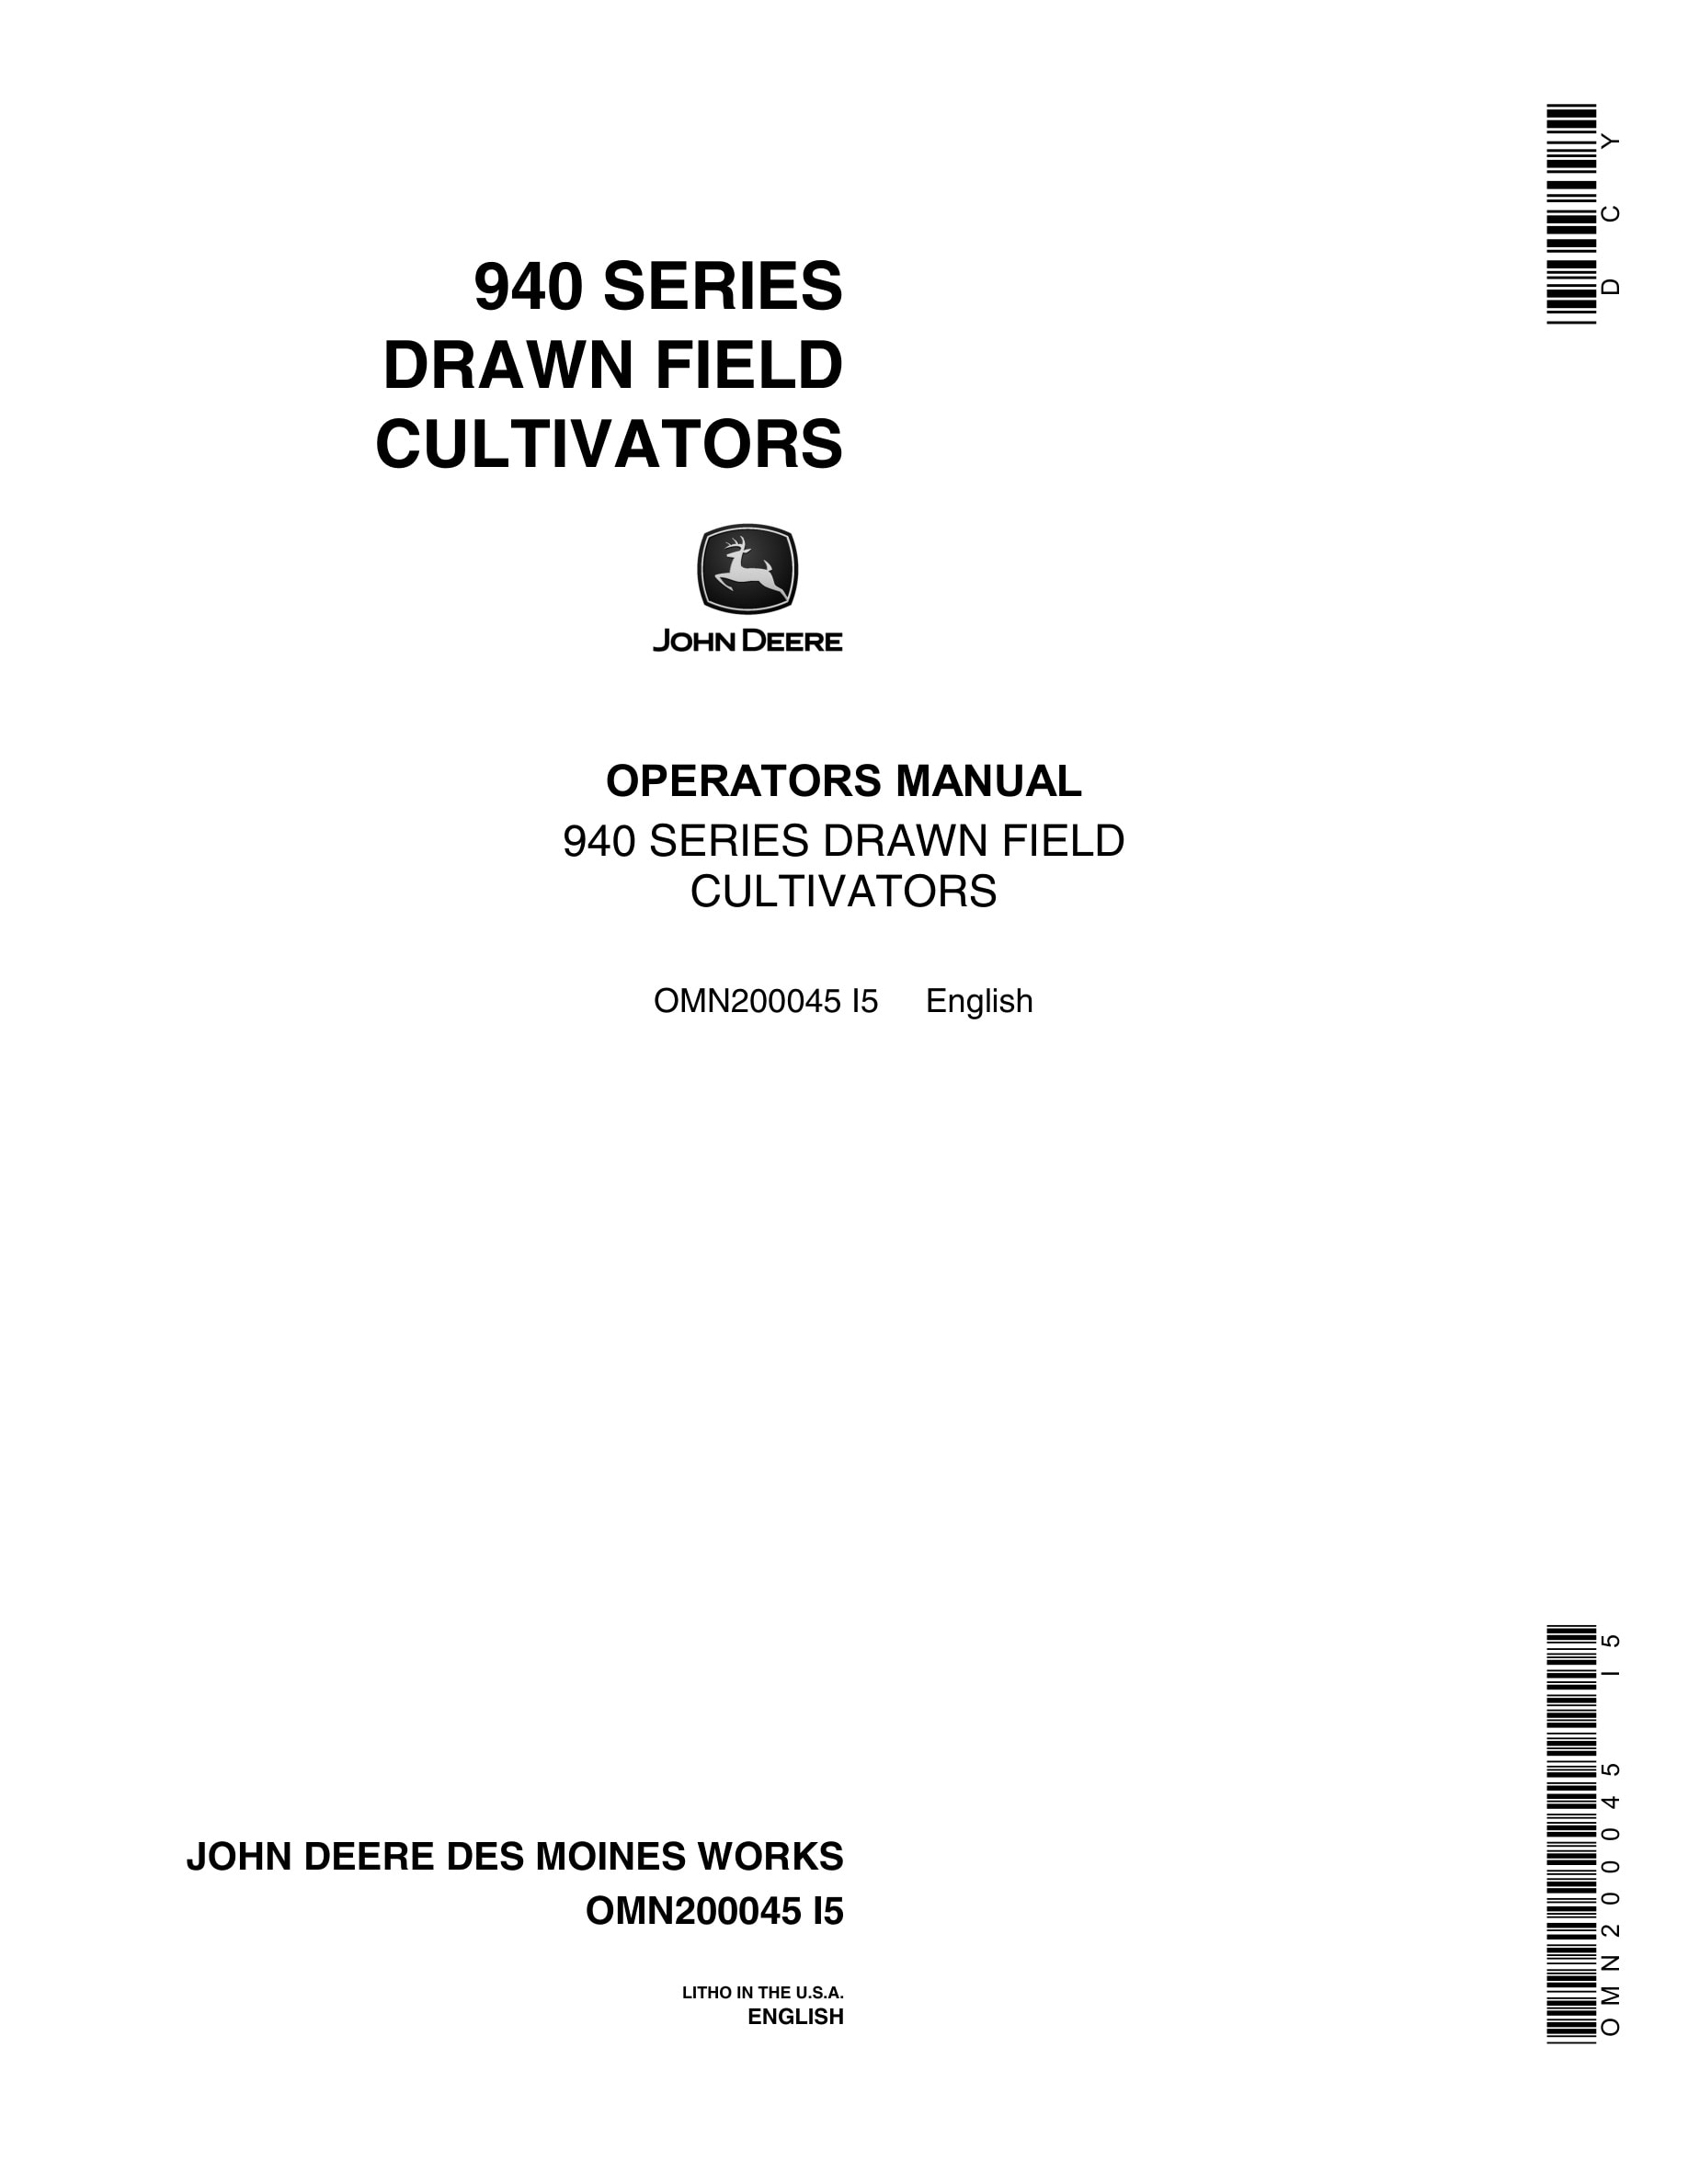 John Deere 940 SERIES DRAWN FIELD CULTIVATOR Operator Manual OMN200045-1